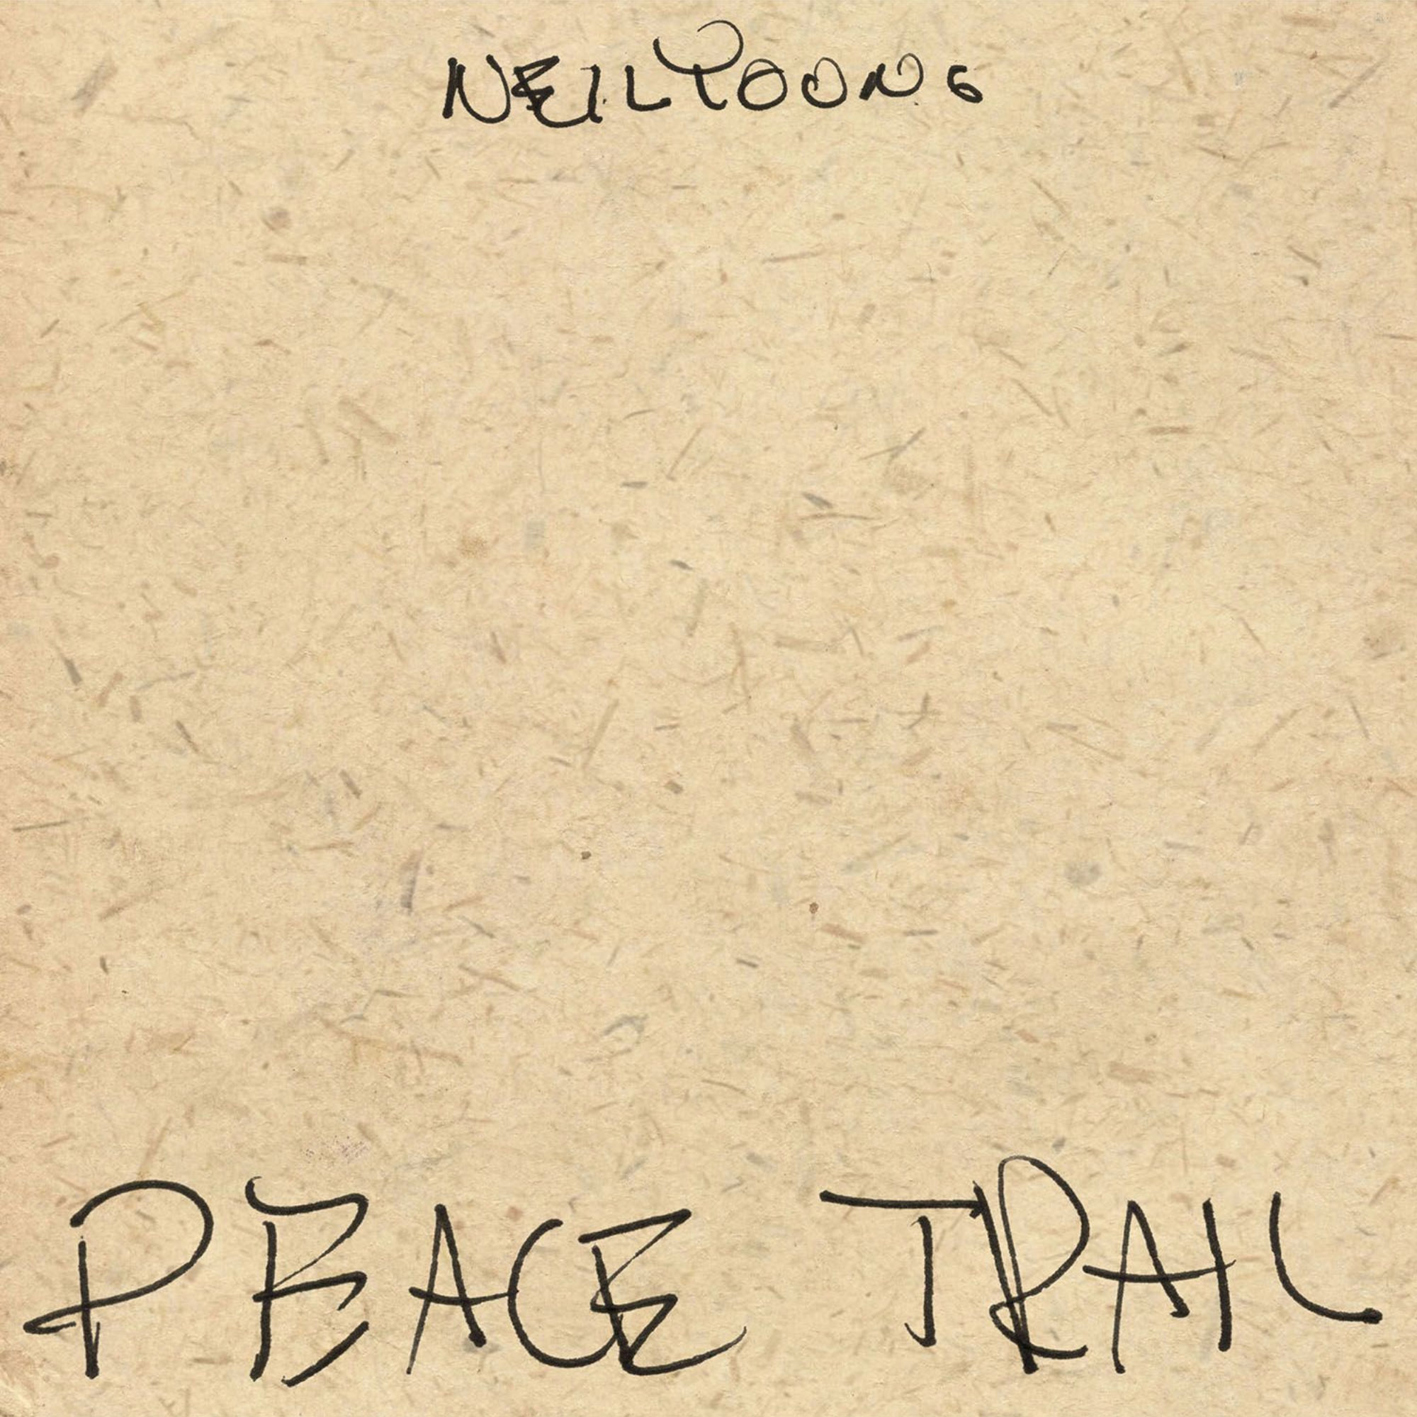 Neil Young - Peace Trail (2016) [HDTracks FLAC 24bit/192Hz]